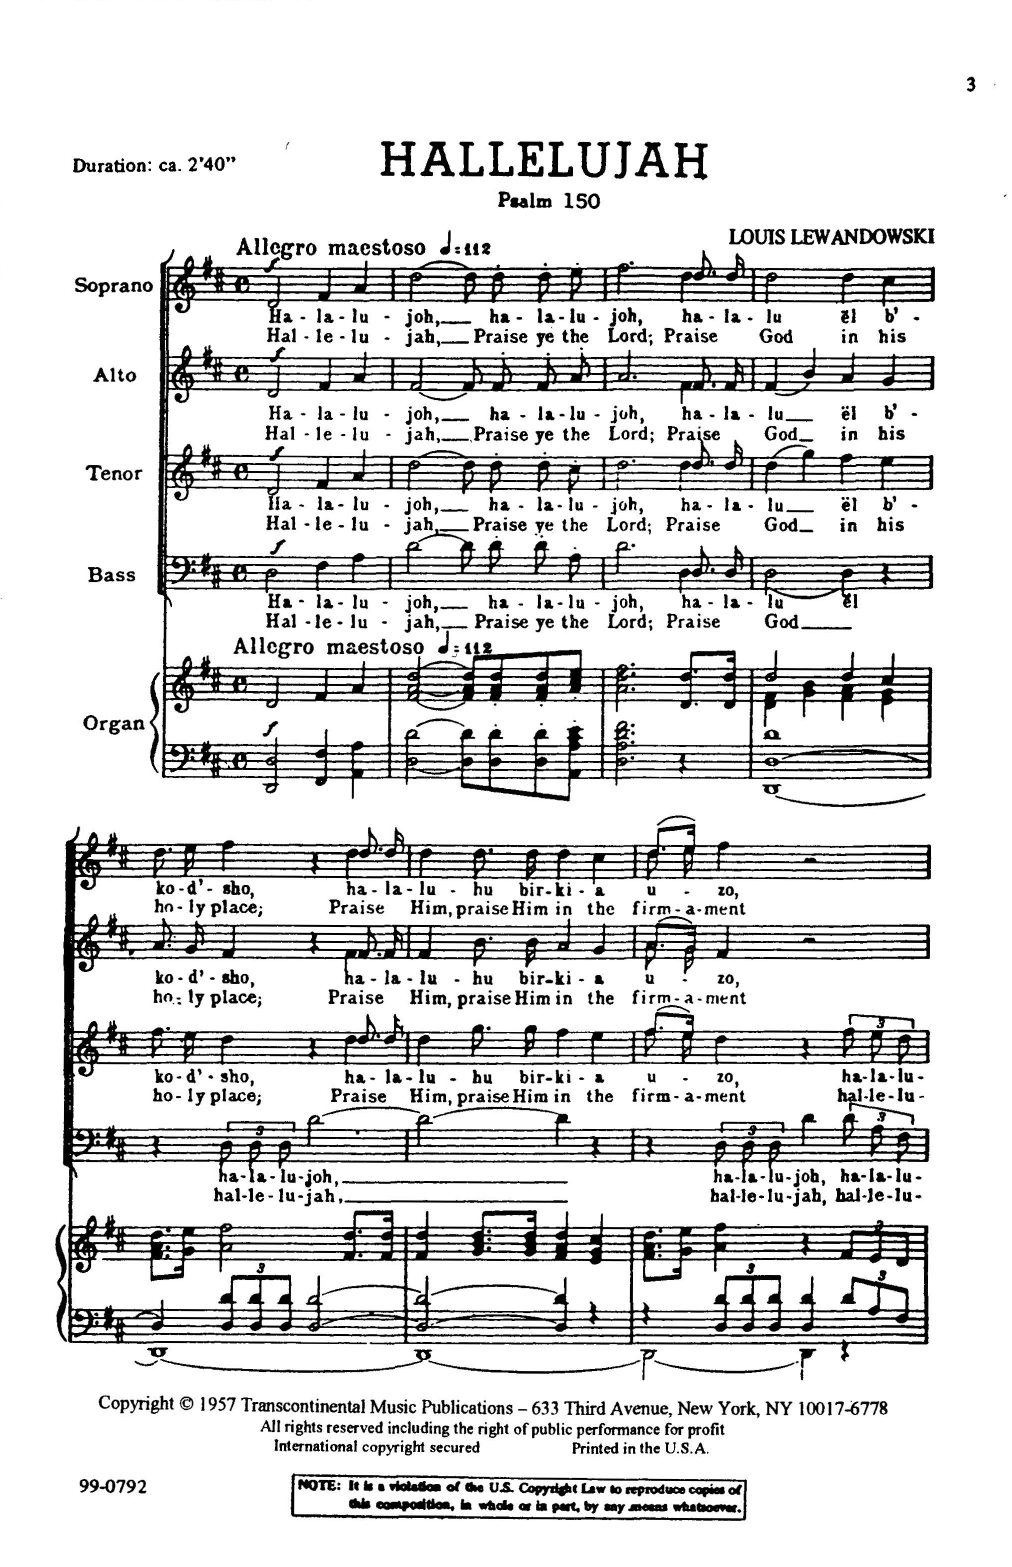 Download Louis Lewandowski Hallelujah (Psalm 150) Sheet Music and learn how to play SATB Choir PDF digital score in minutes